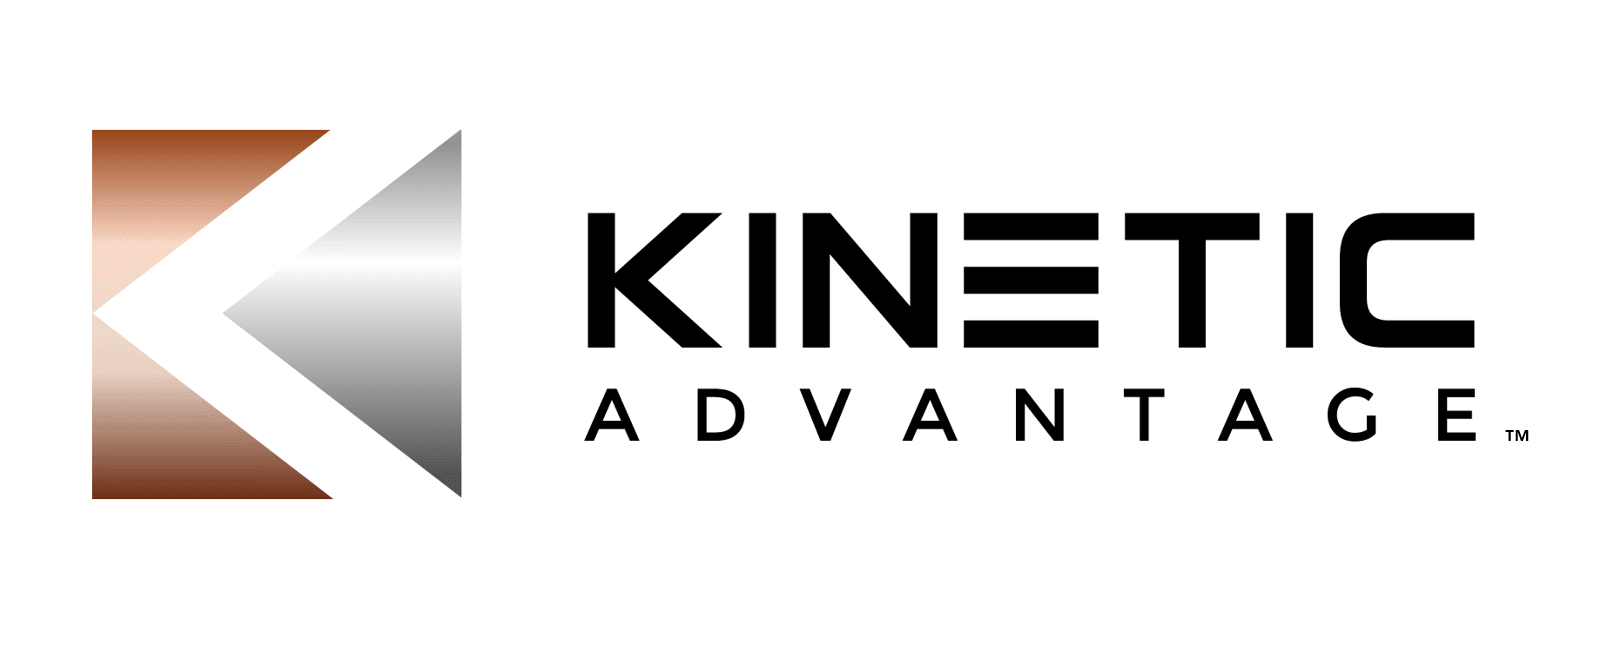 Kinetic Advantage, an IAA partner